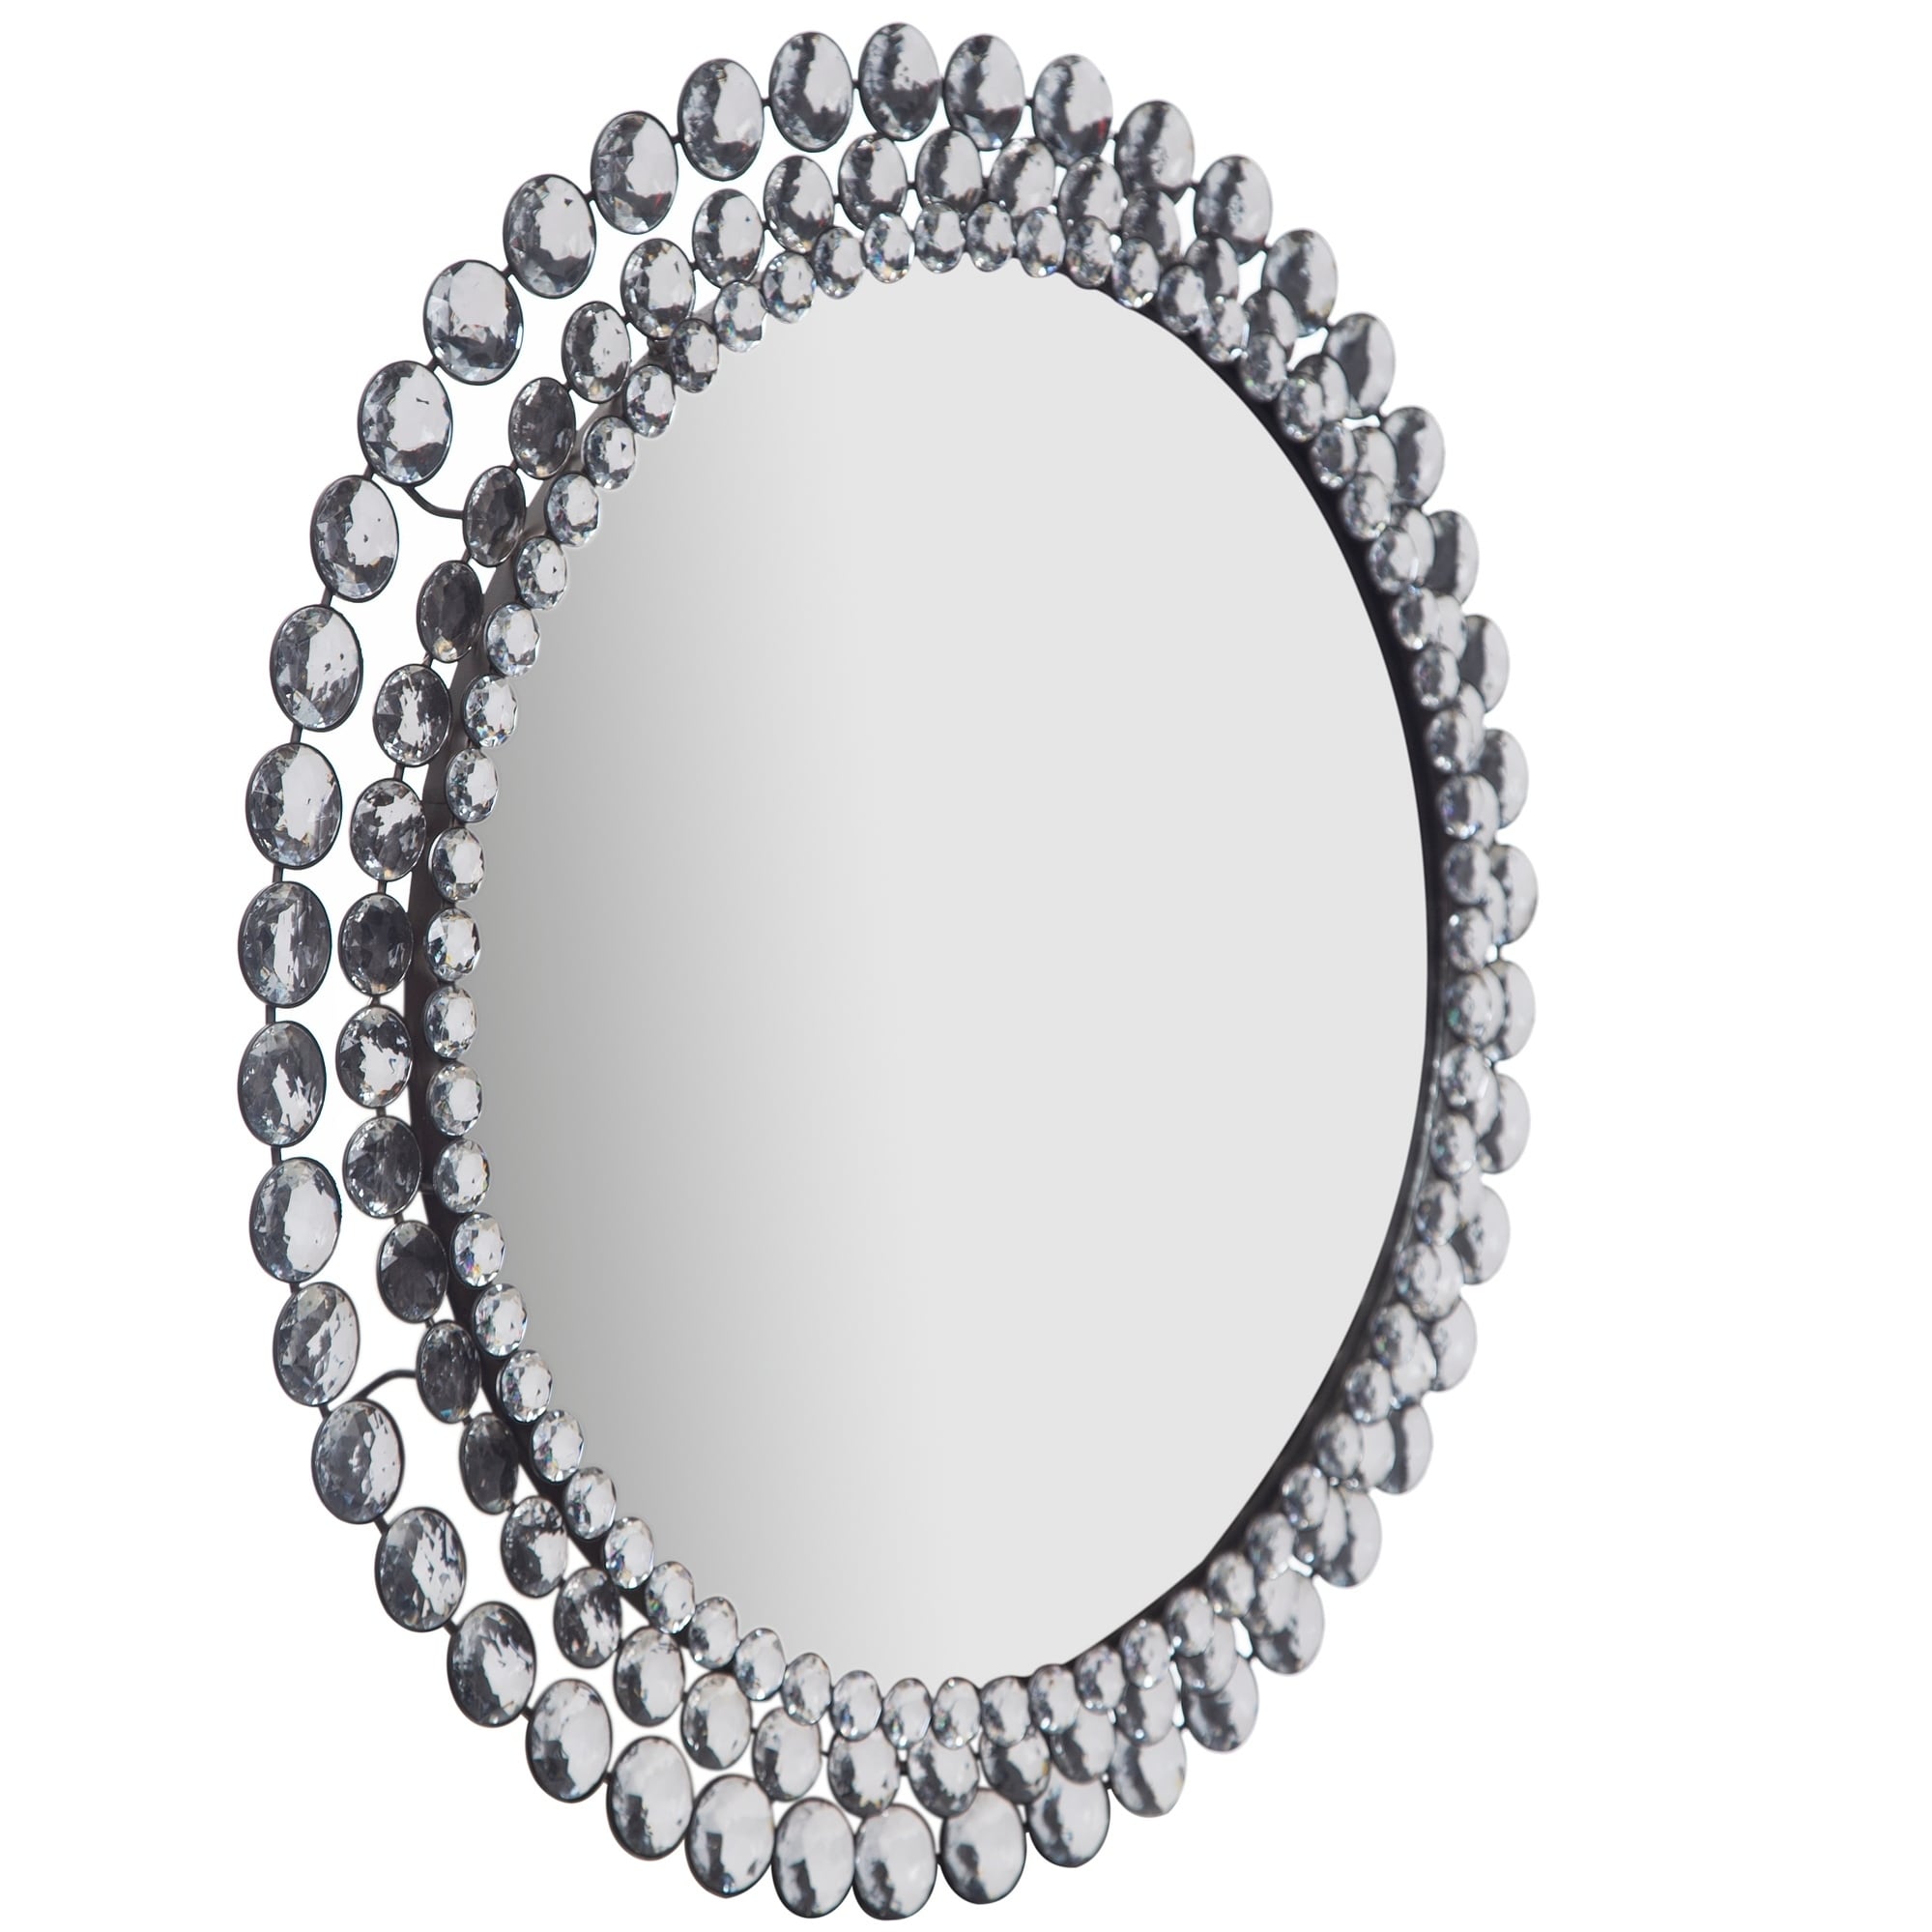 jeweled mirror